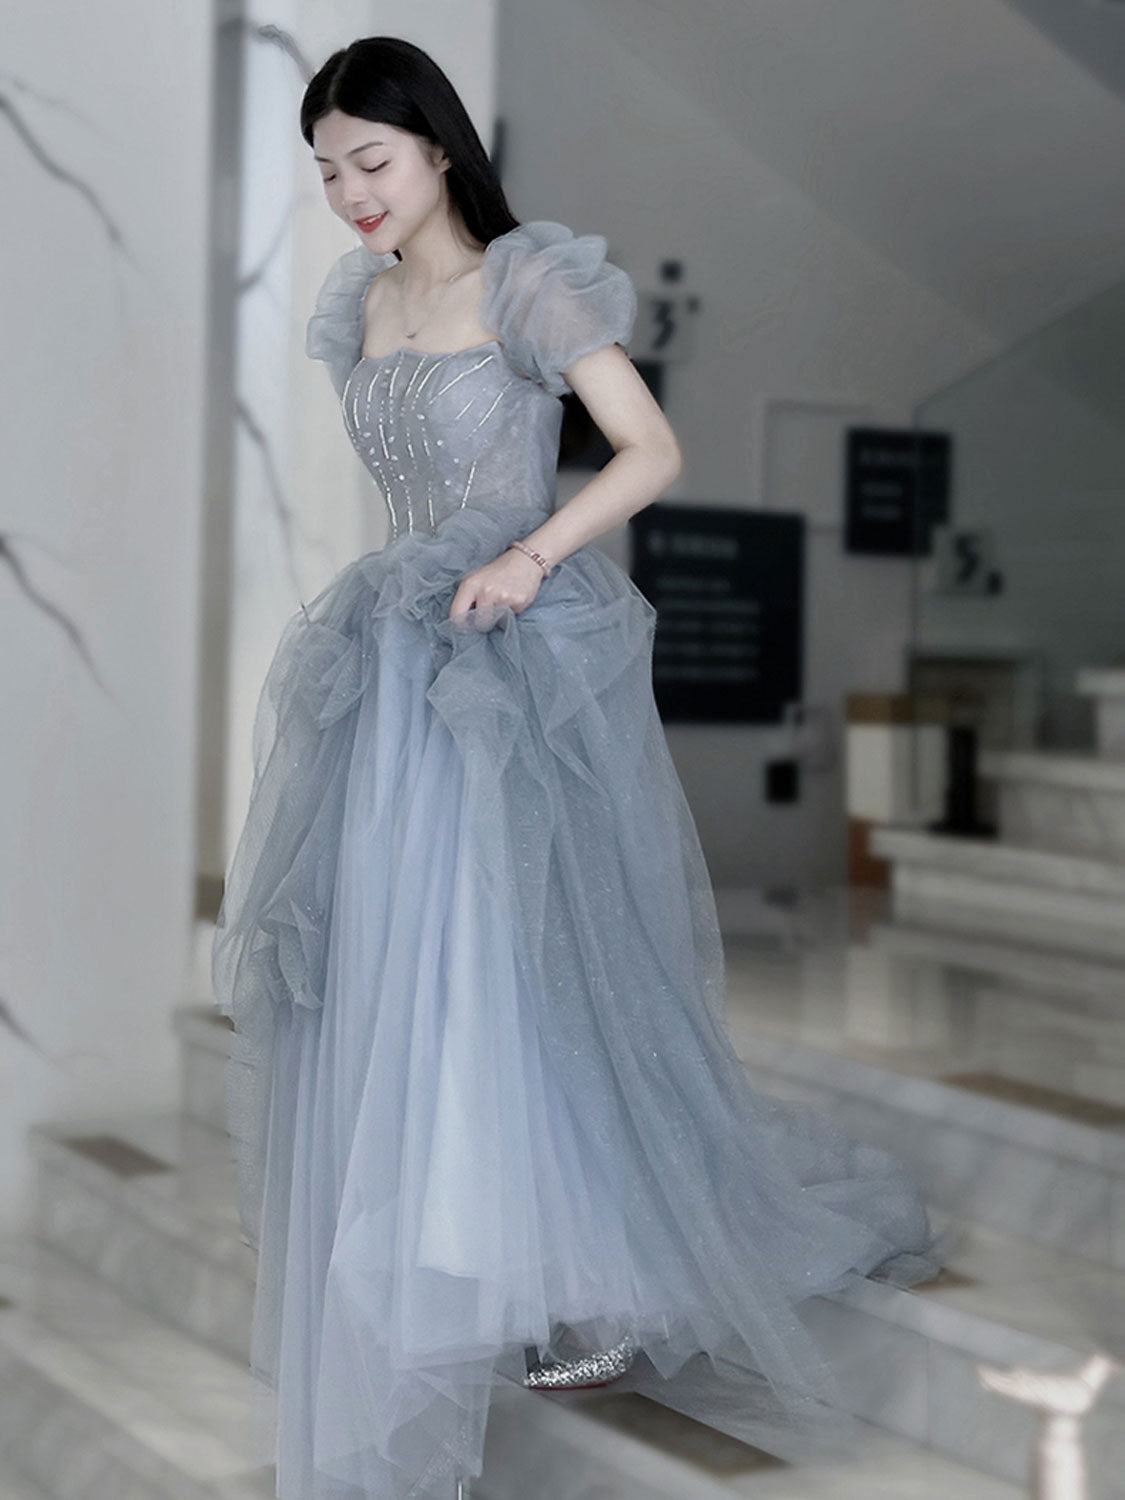 Gray blue beads long prom dress gray tulle formal dress